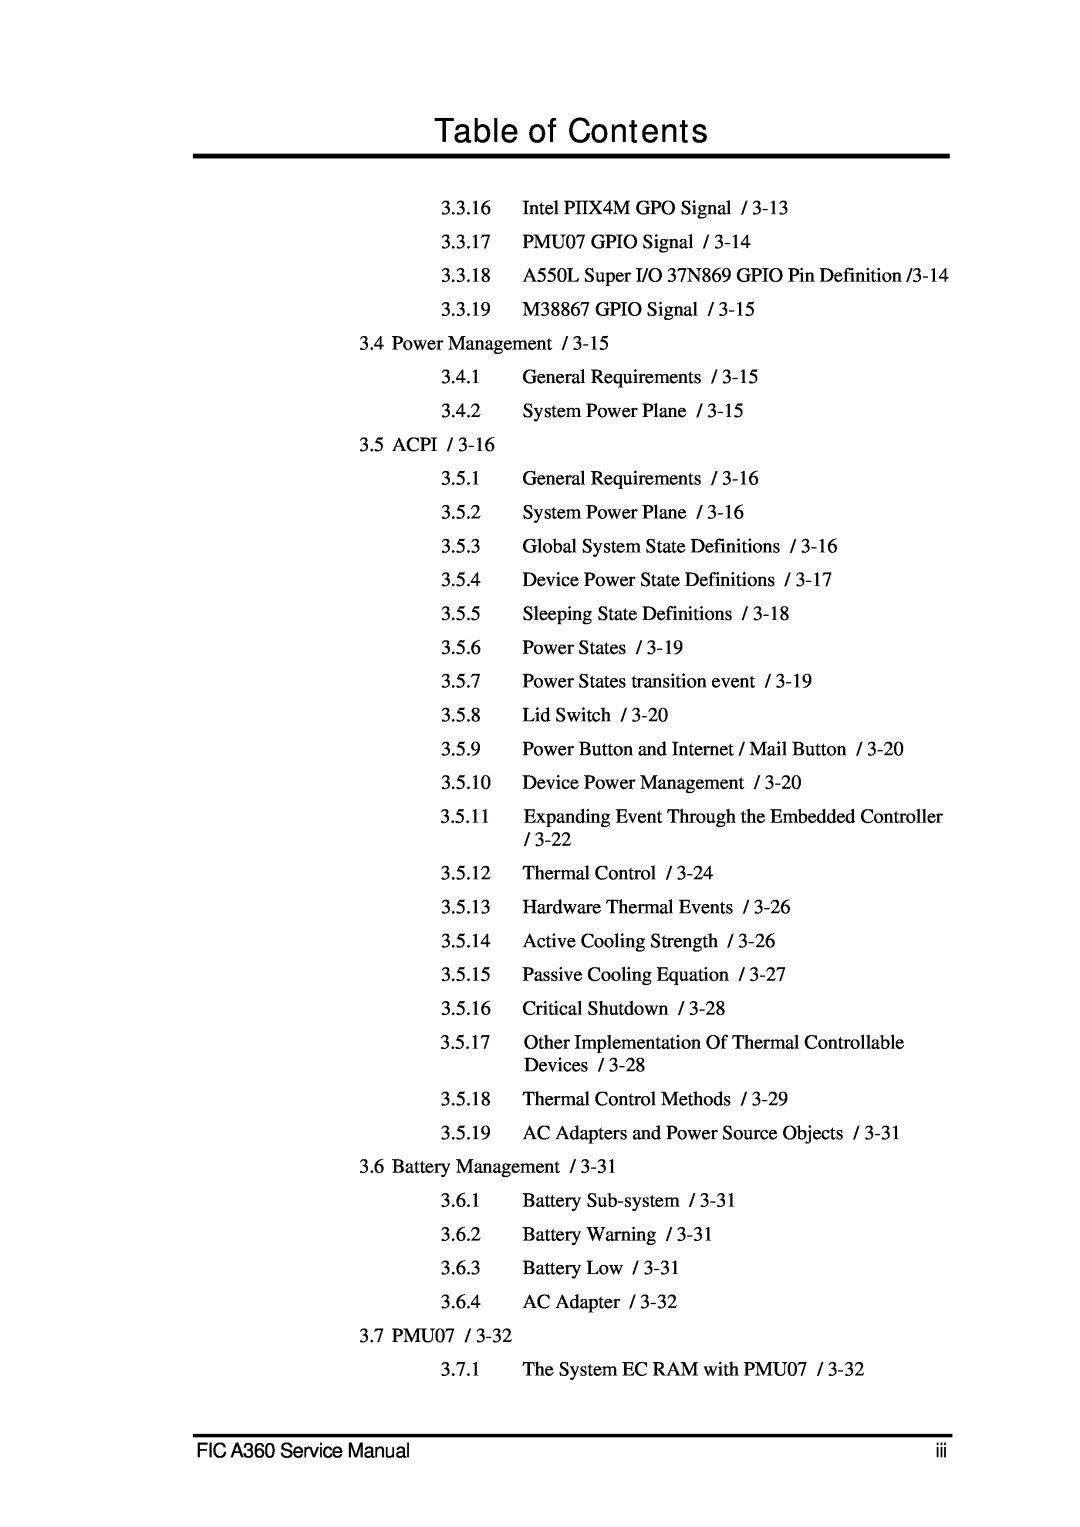 FIC A360 service manual Table of Contents, Intel PIIX4M GPO Signal 3.3.17 PMU07 GPIO Signal 